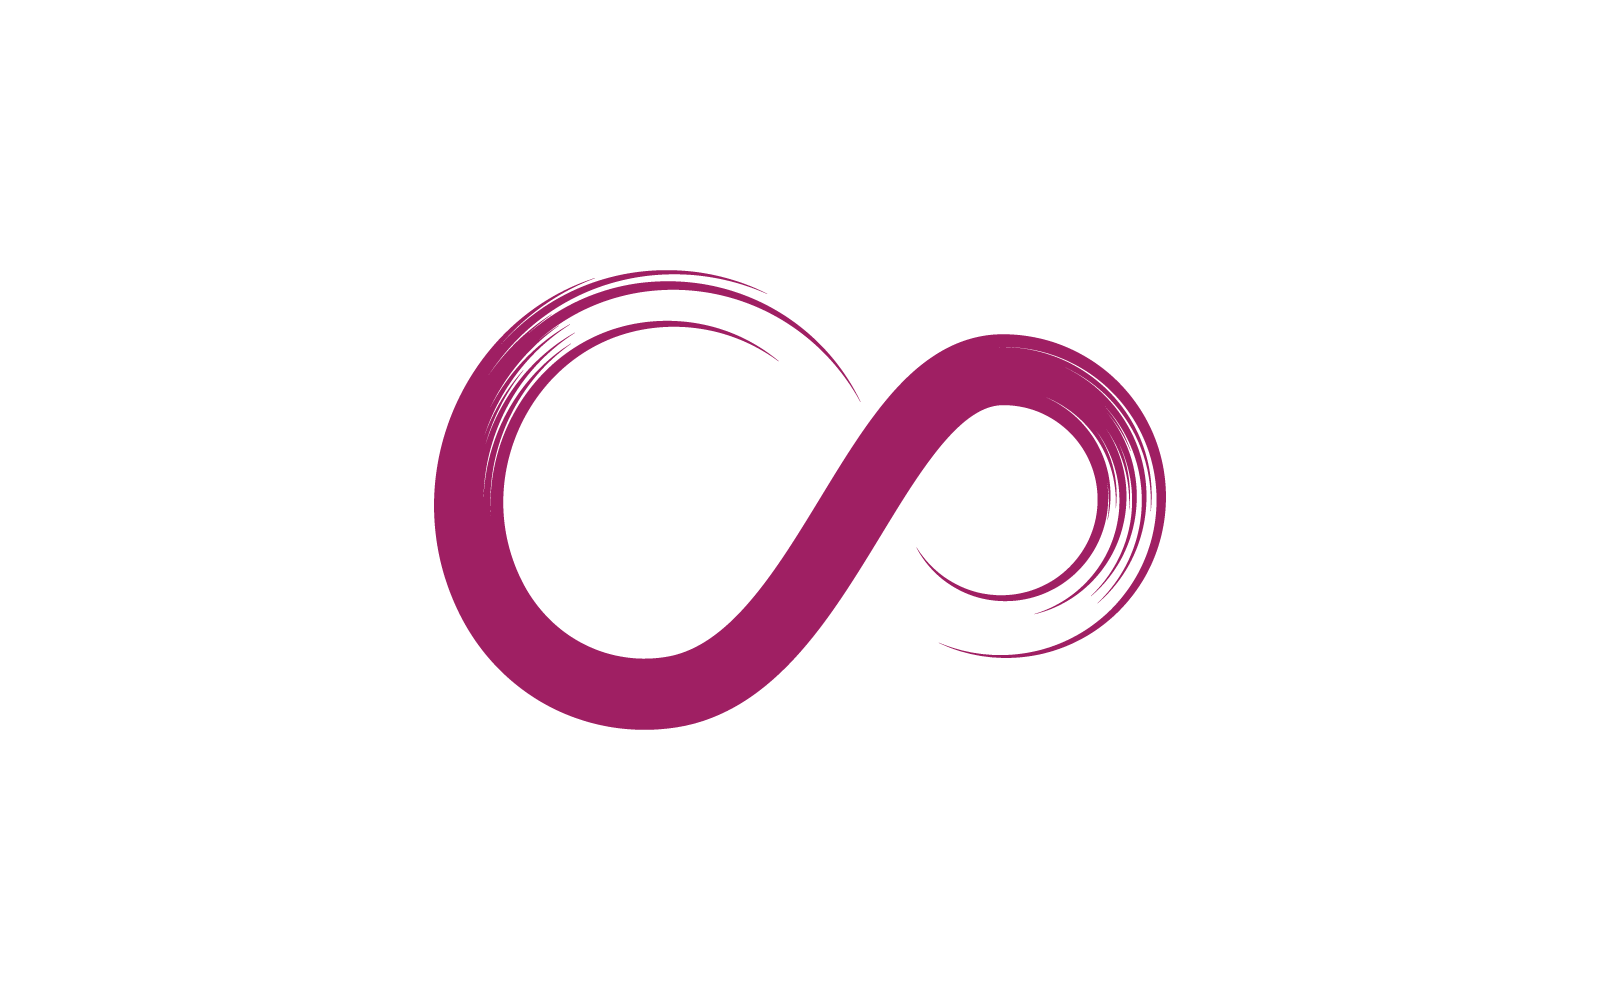 Infinity illustration logo template vector flat design eps 10